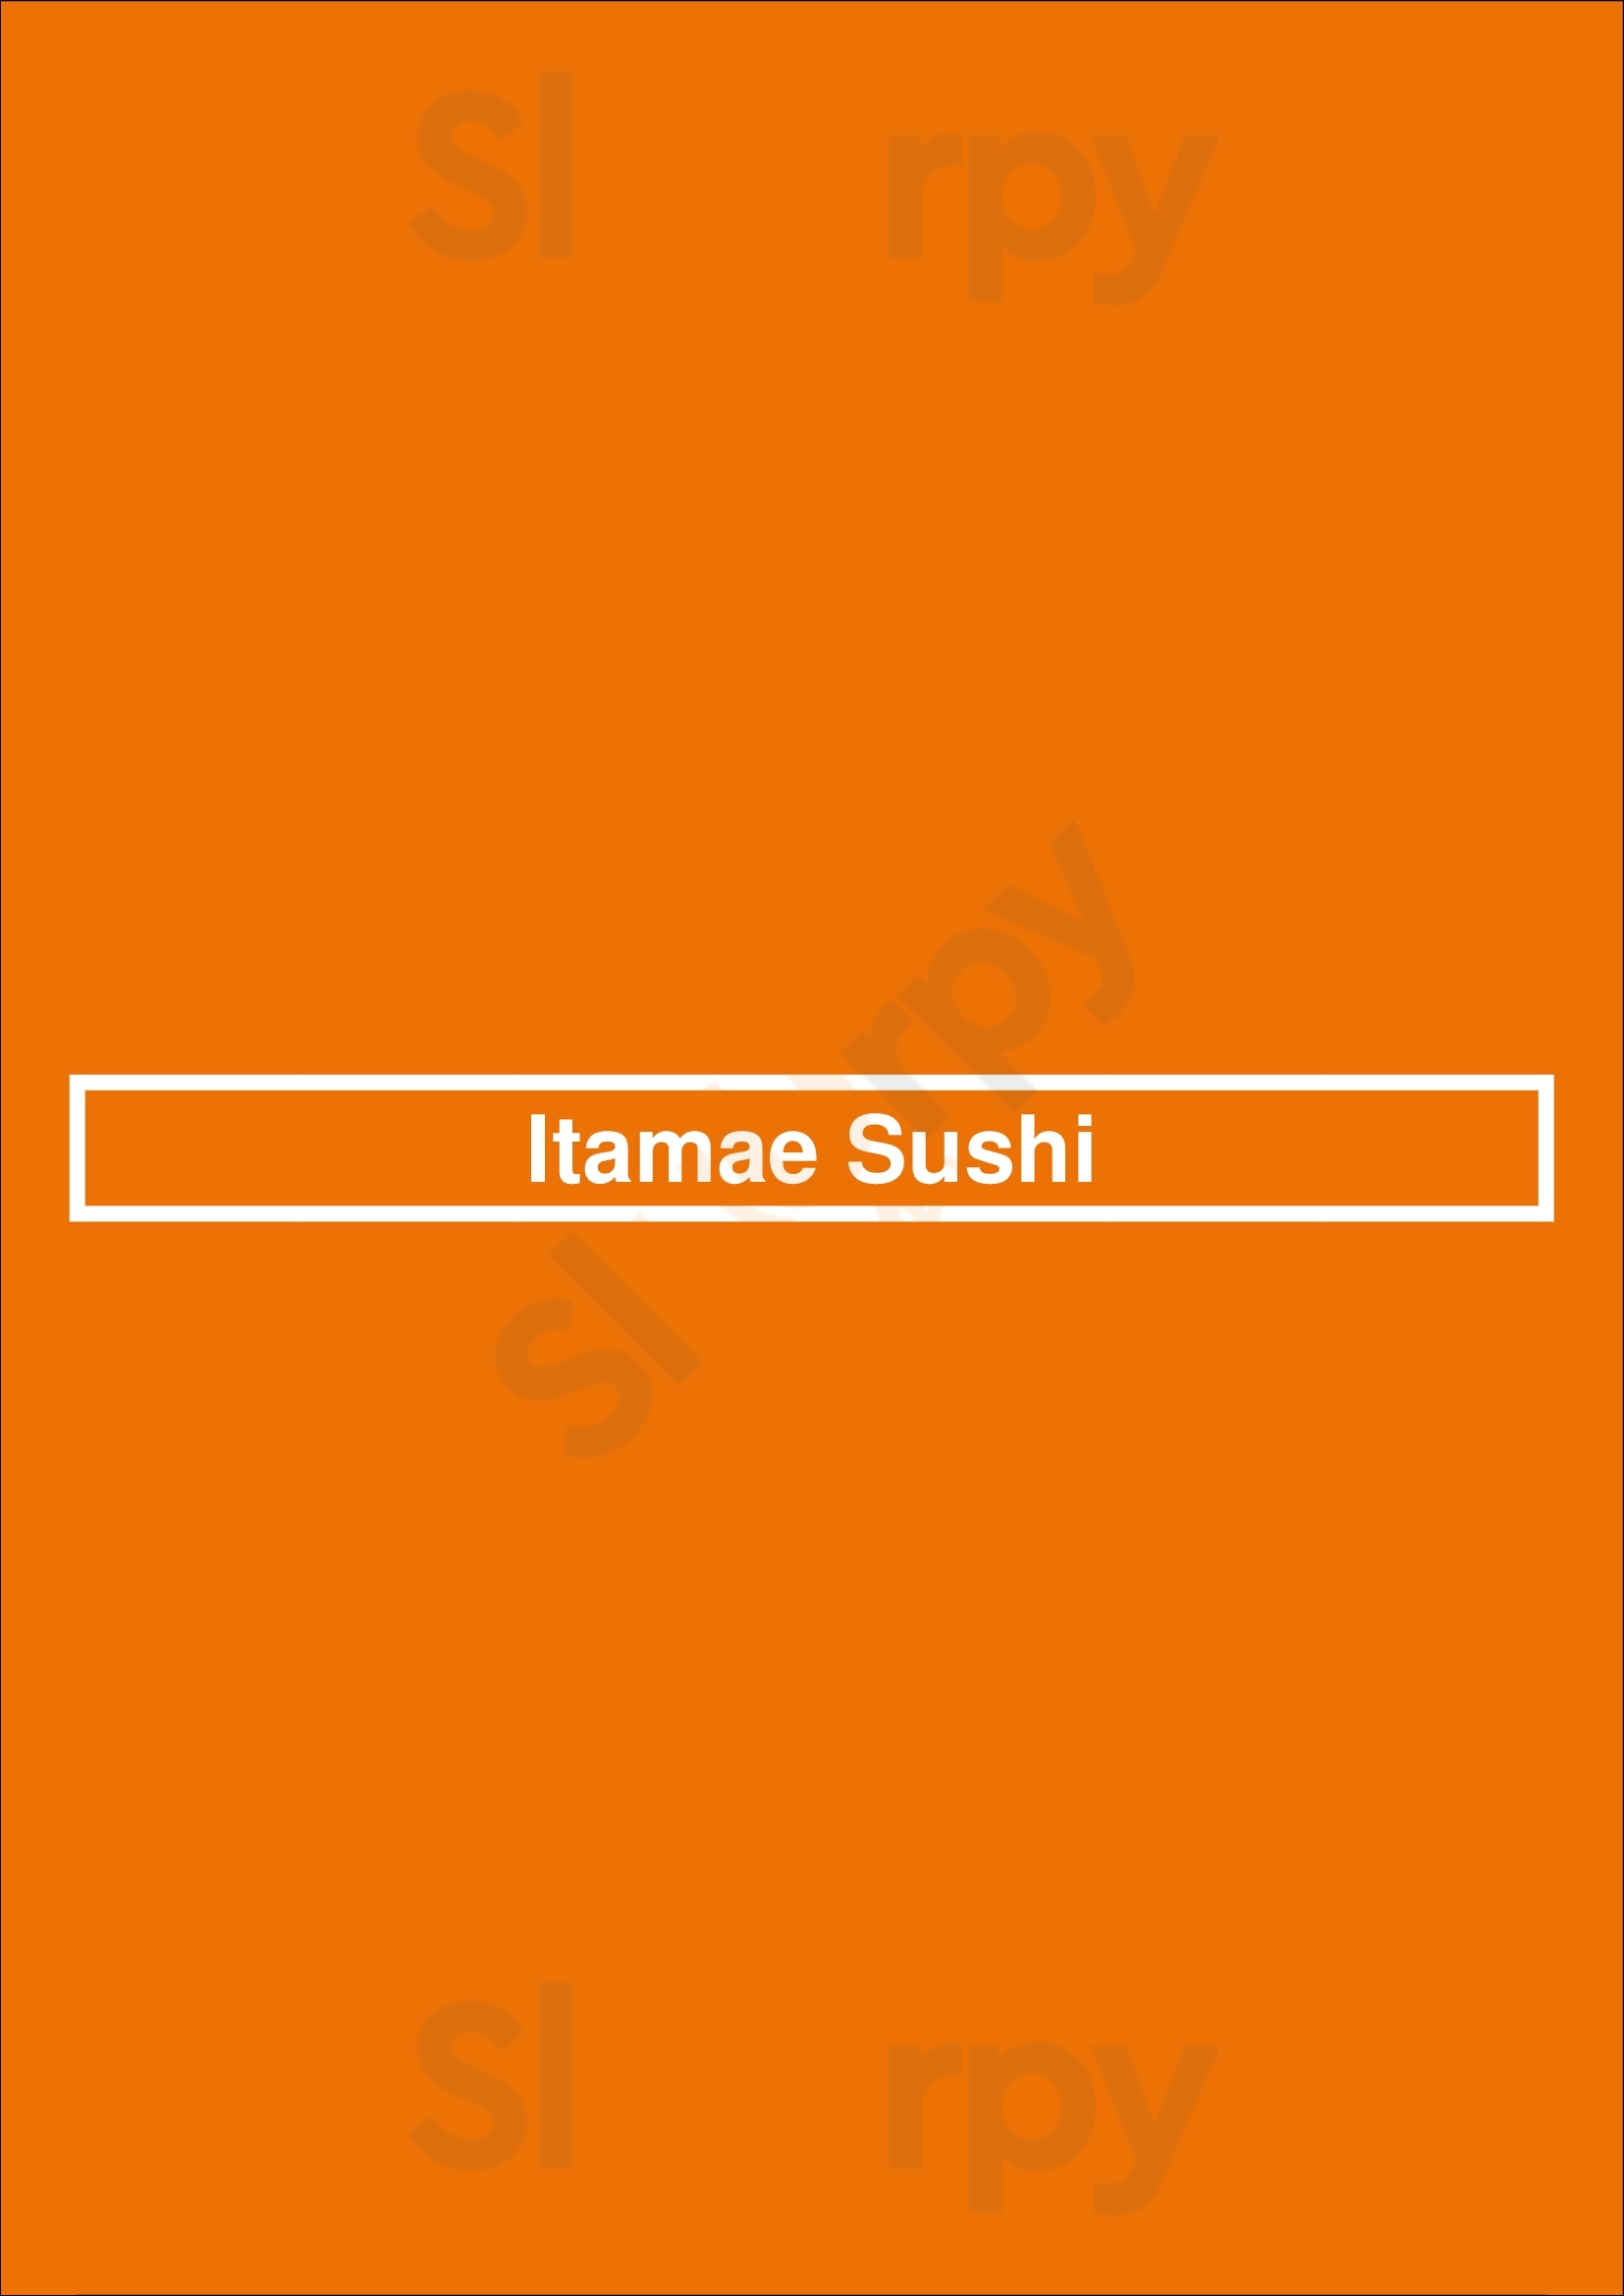 Itamae Sushi Buenos Aires Menu - 1